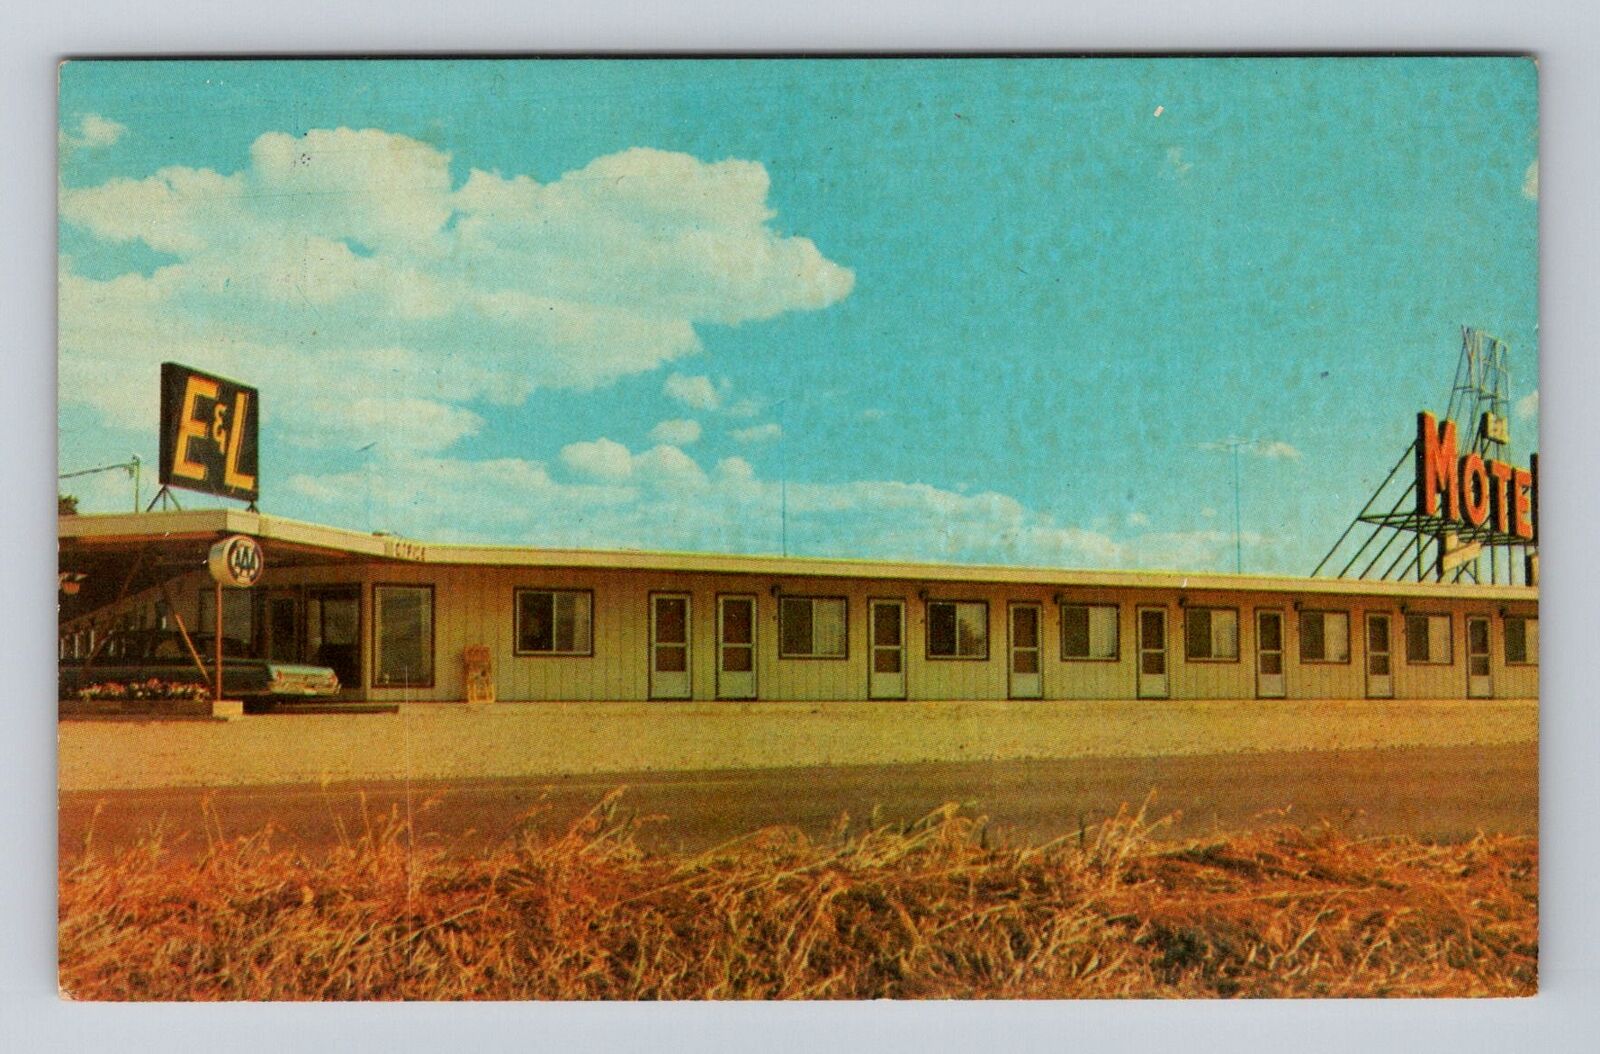 Fremont IN-Indiana, E & L Motel Advertising Vintage Souvenir Postcard